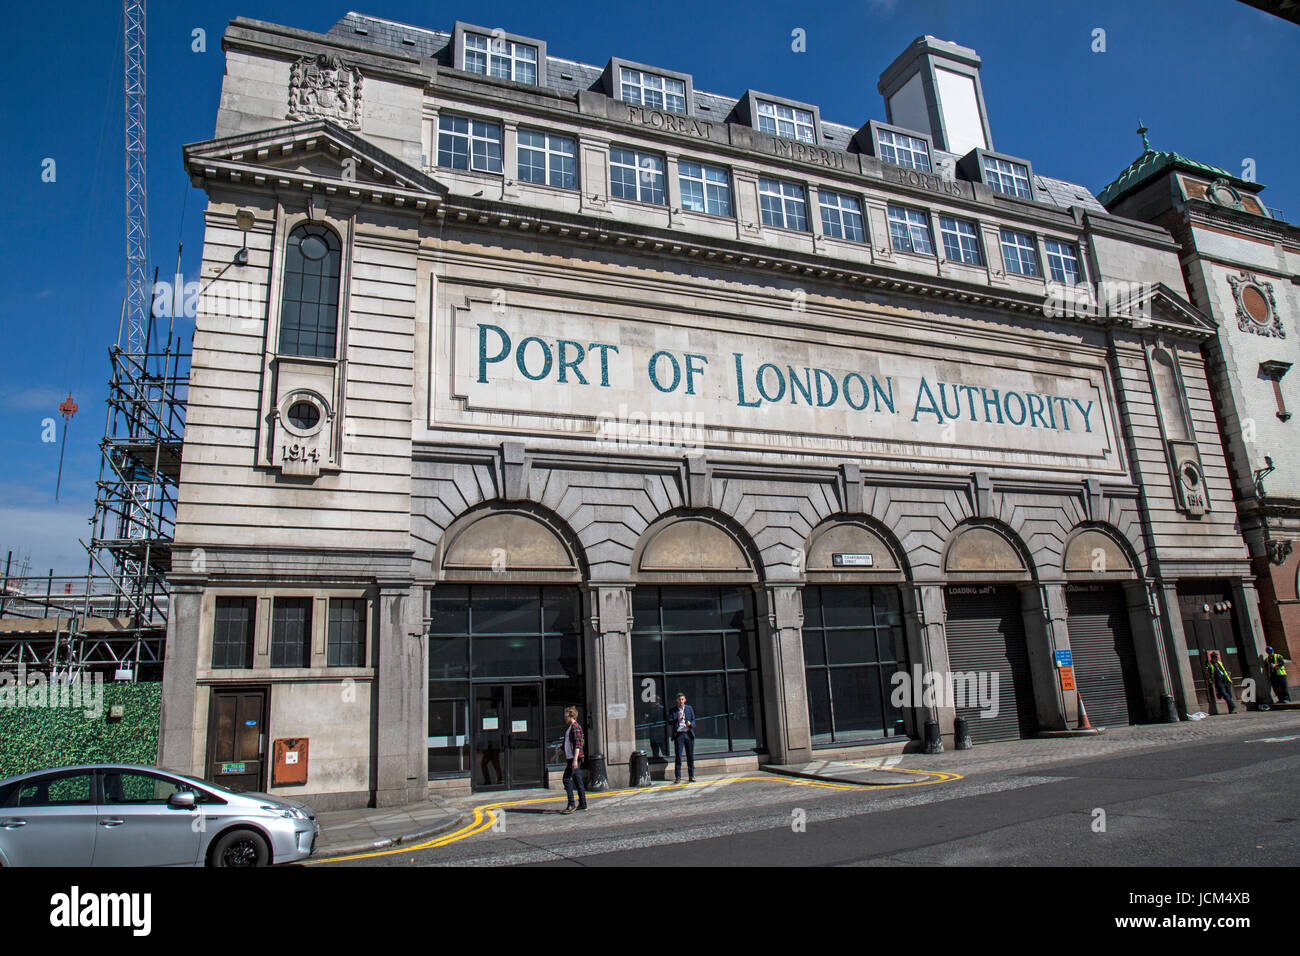 Port of London Authority building on Charterhouse Street in the Smithfield's area of London. Stock Photo